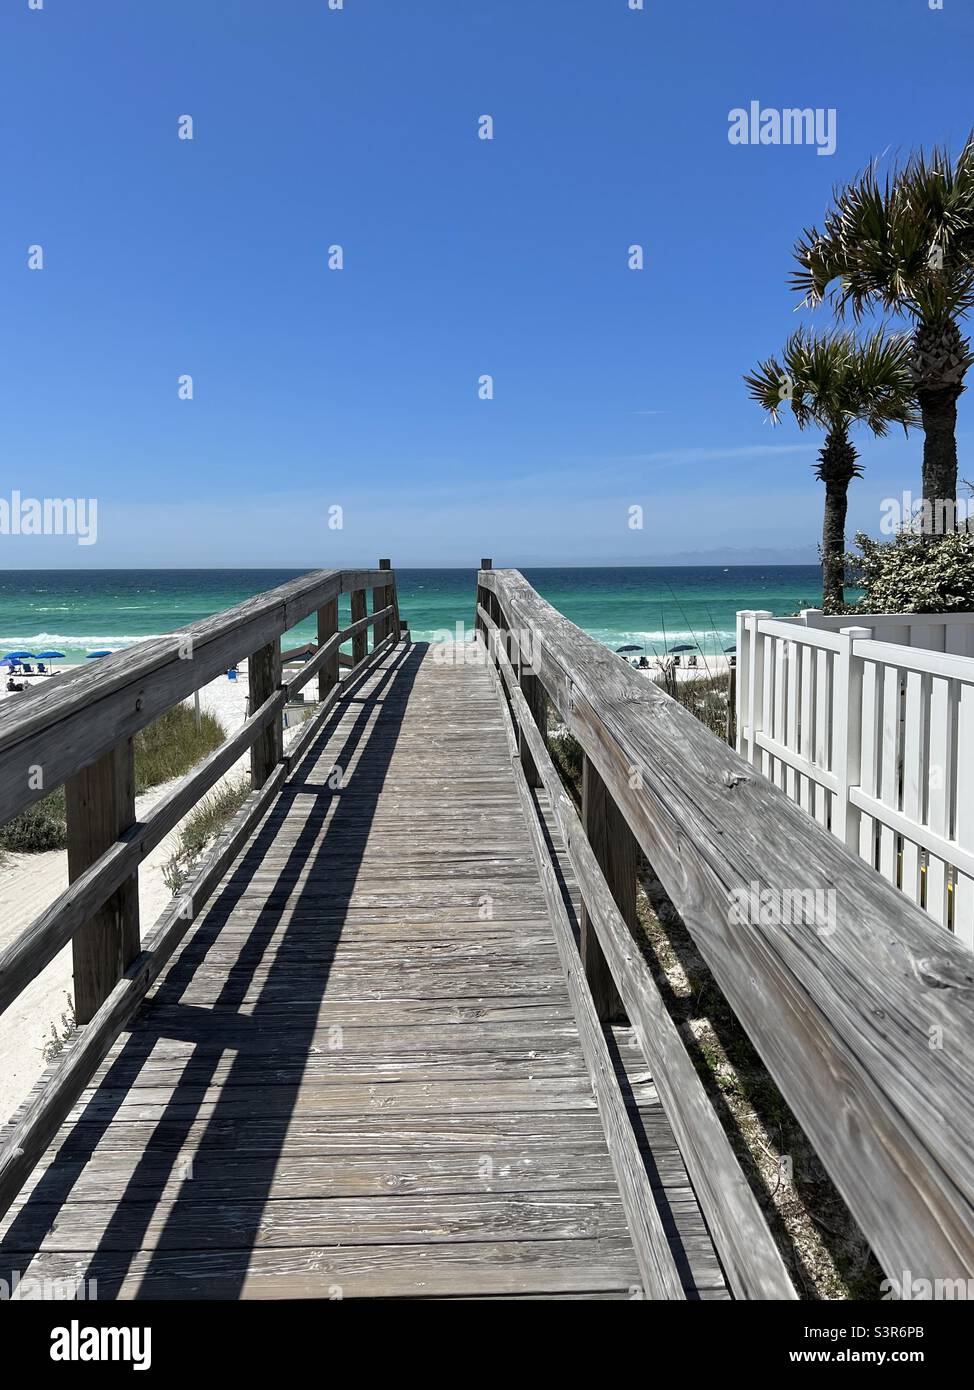 Wooden walkway to Destin, Florida beach public access Stock Photo